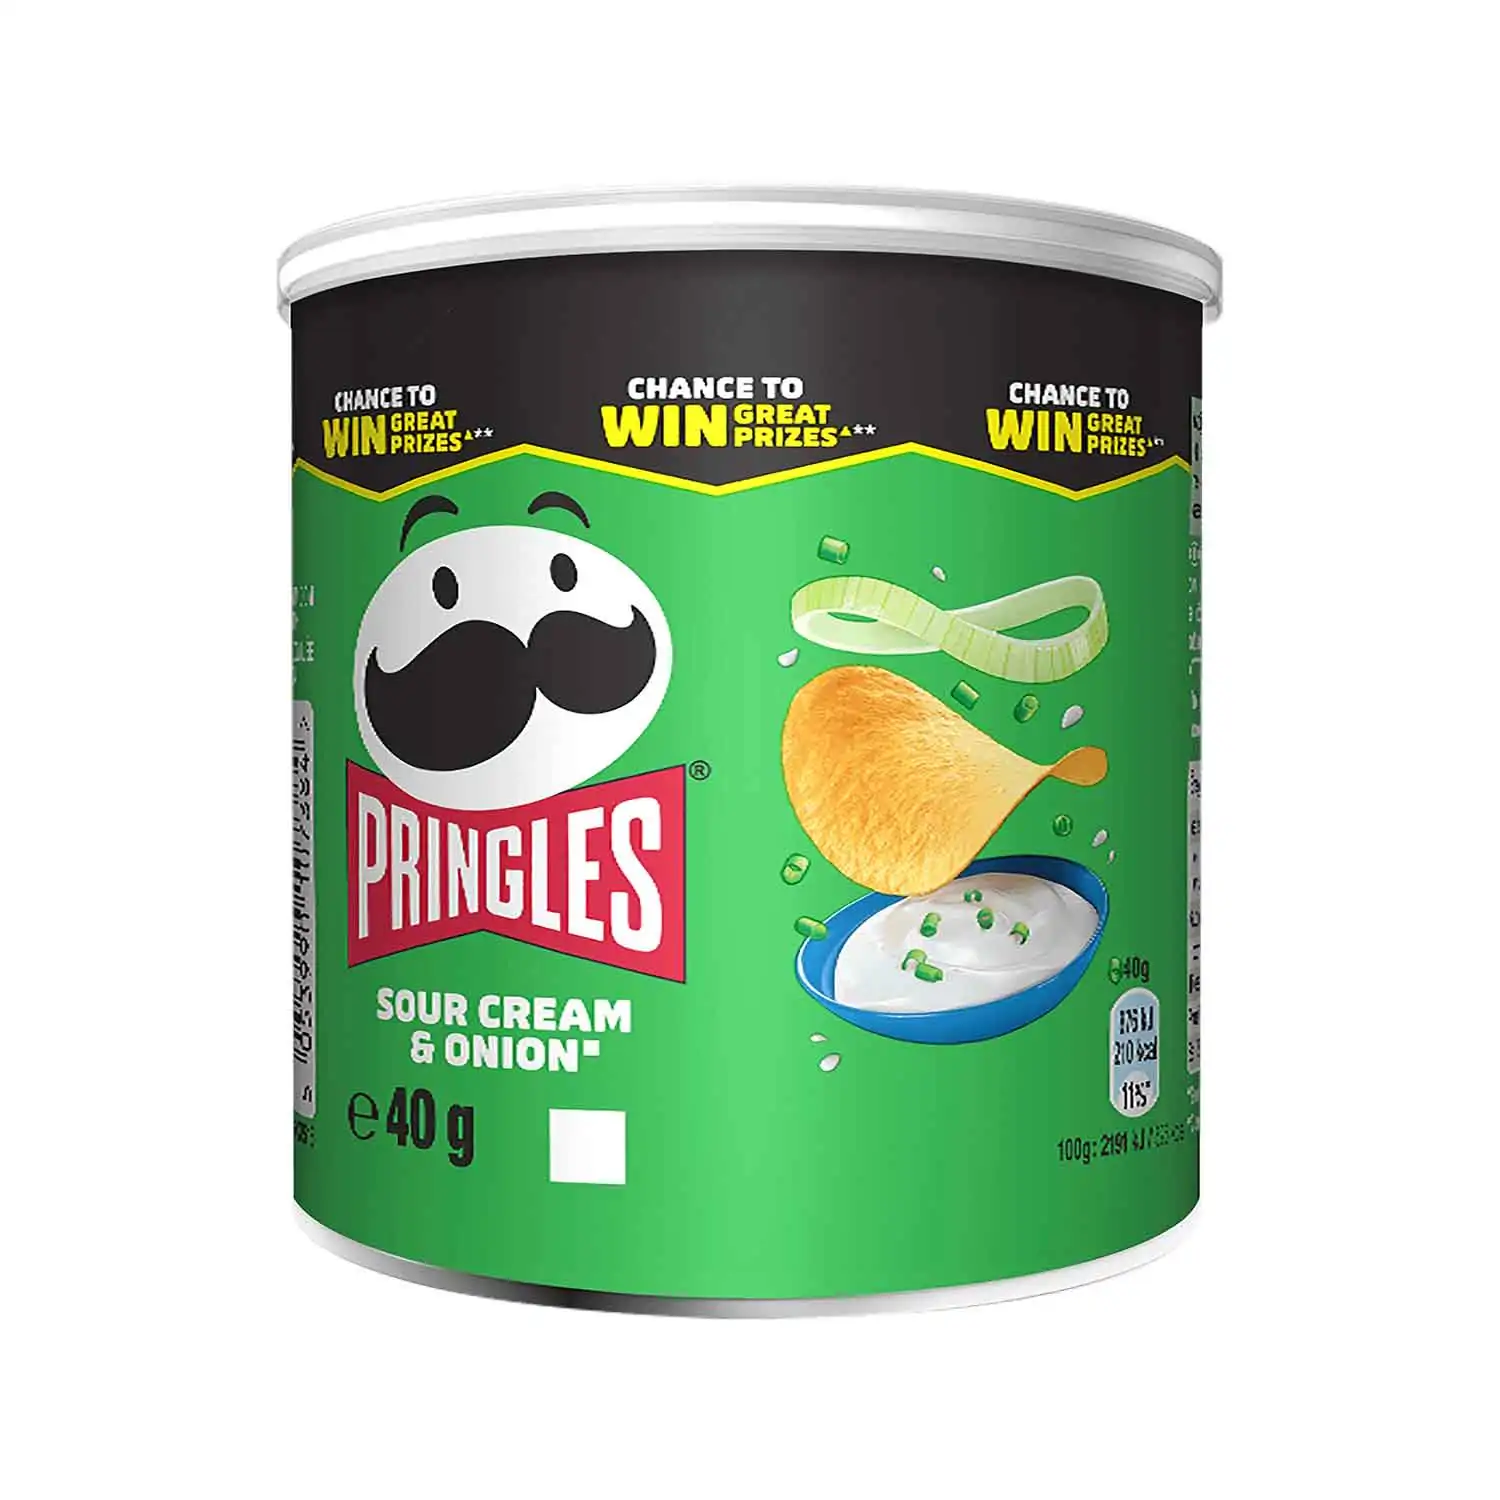 Pringles sour cream & onion 40g - Buy at Real Tobacco